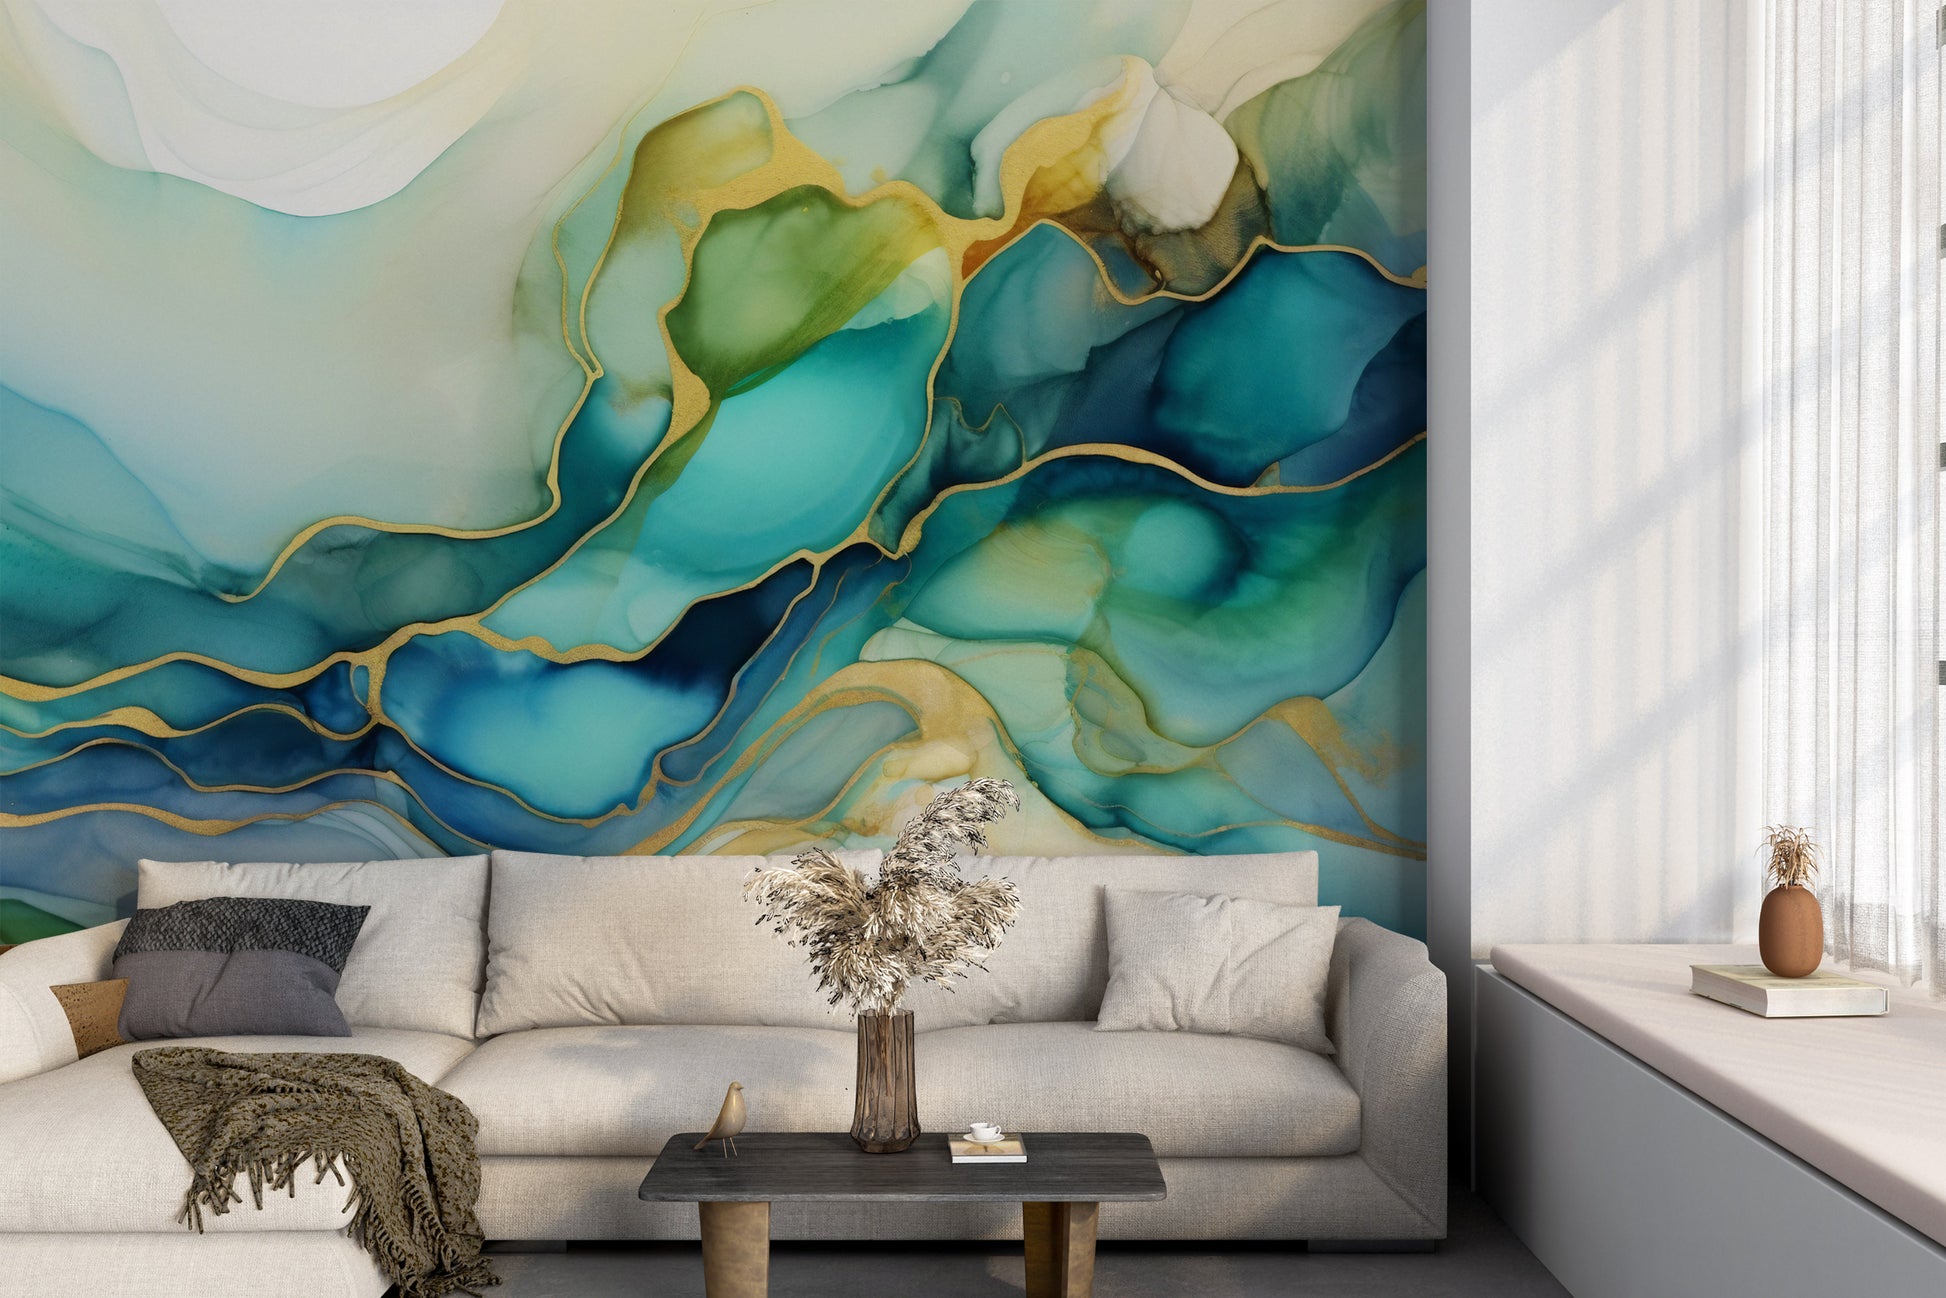 Fluid Art Wallpaper for Modern Home Decor